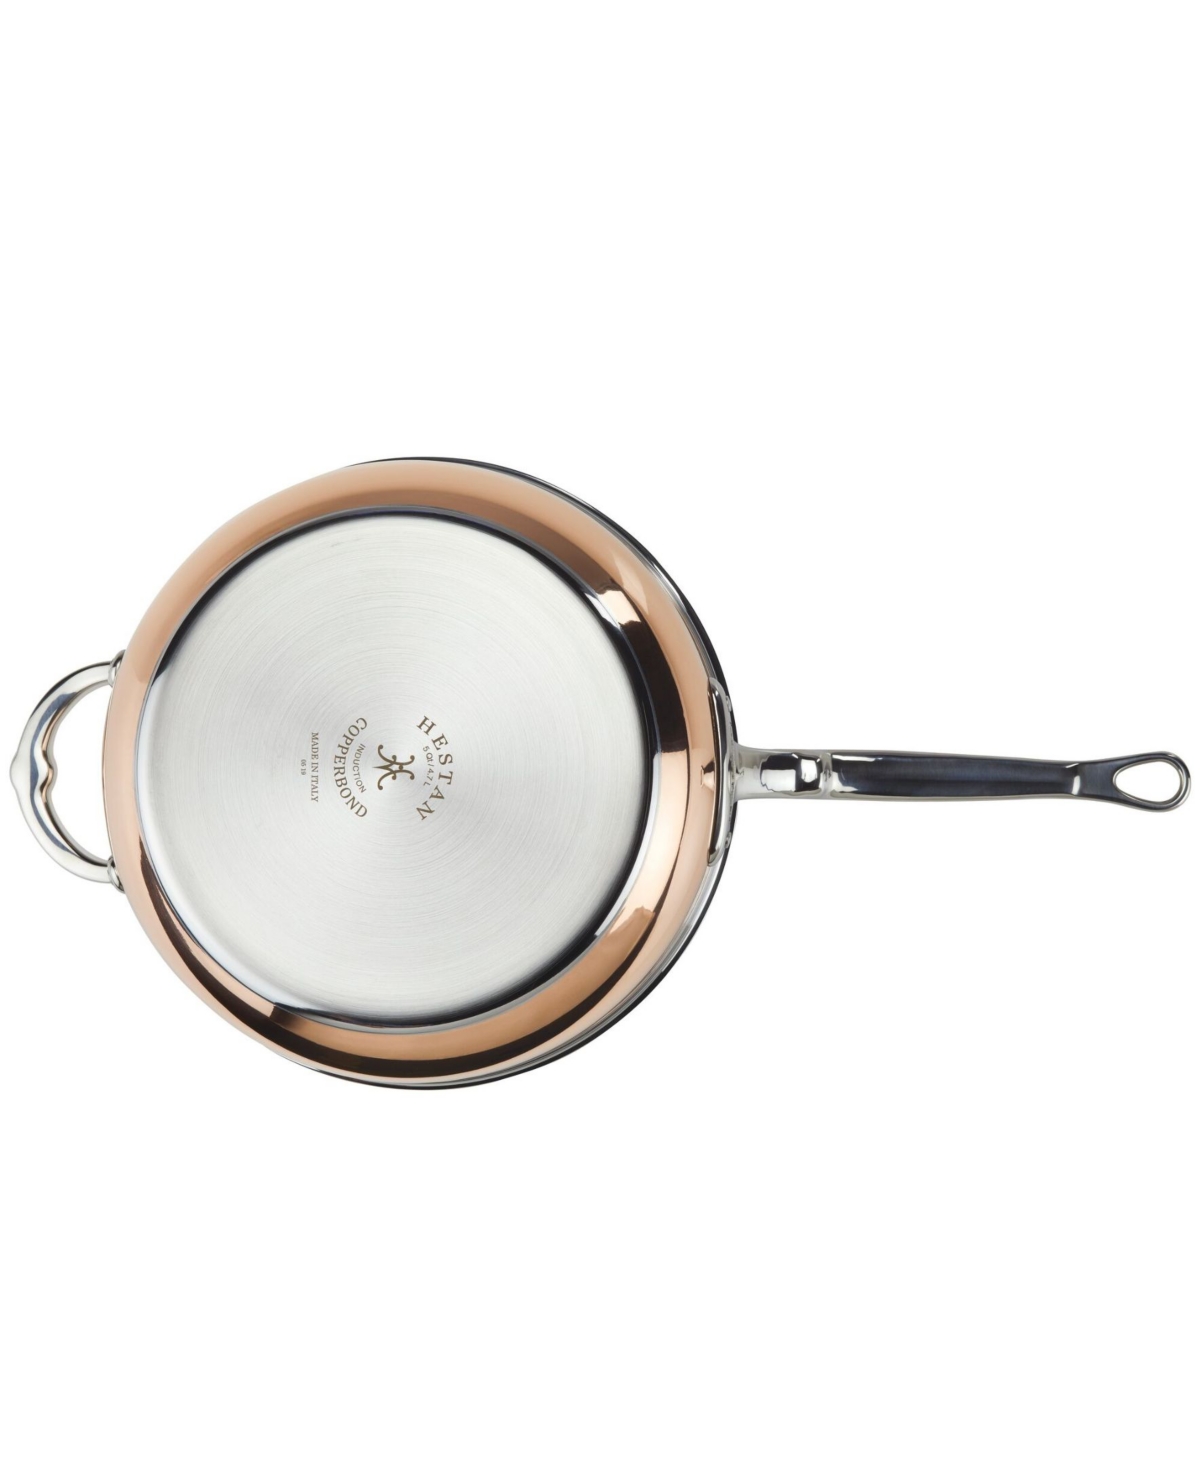 Shop Hestan Copperbond Copper 5-quart Covered Essential Pan With Helper Handle